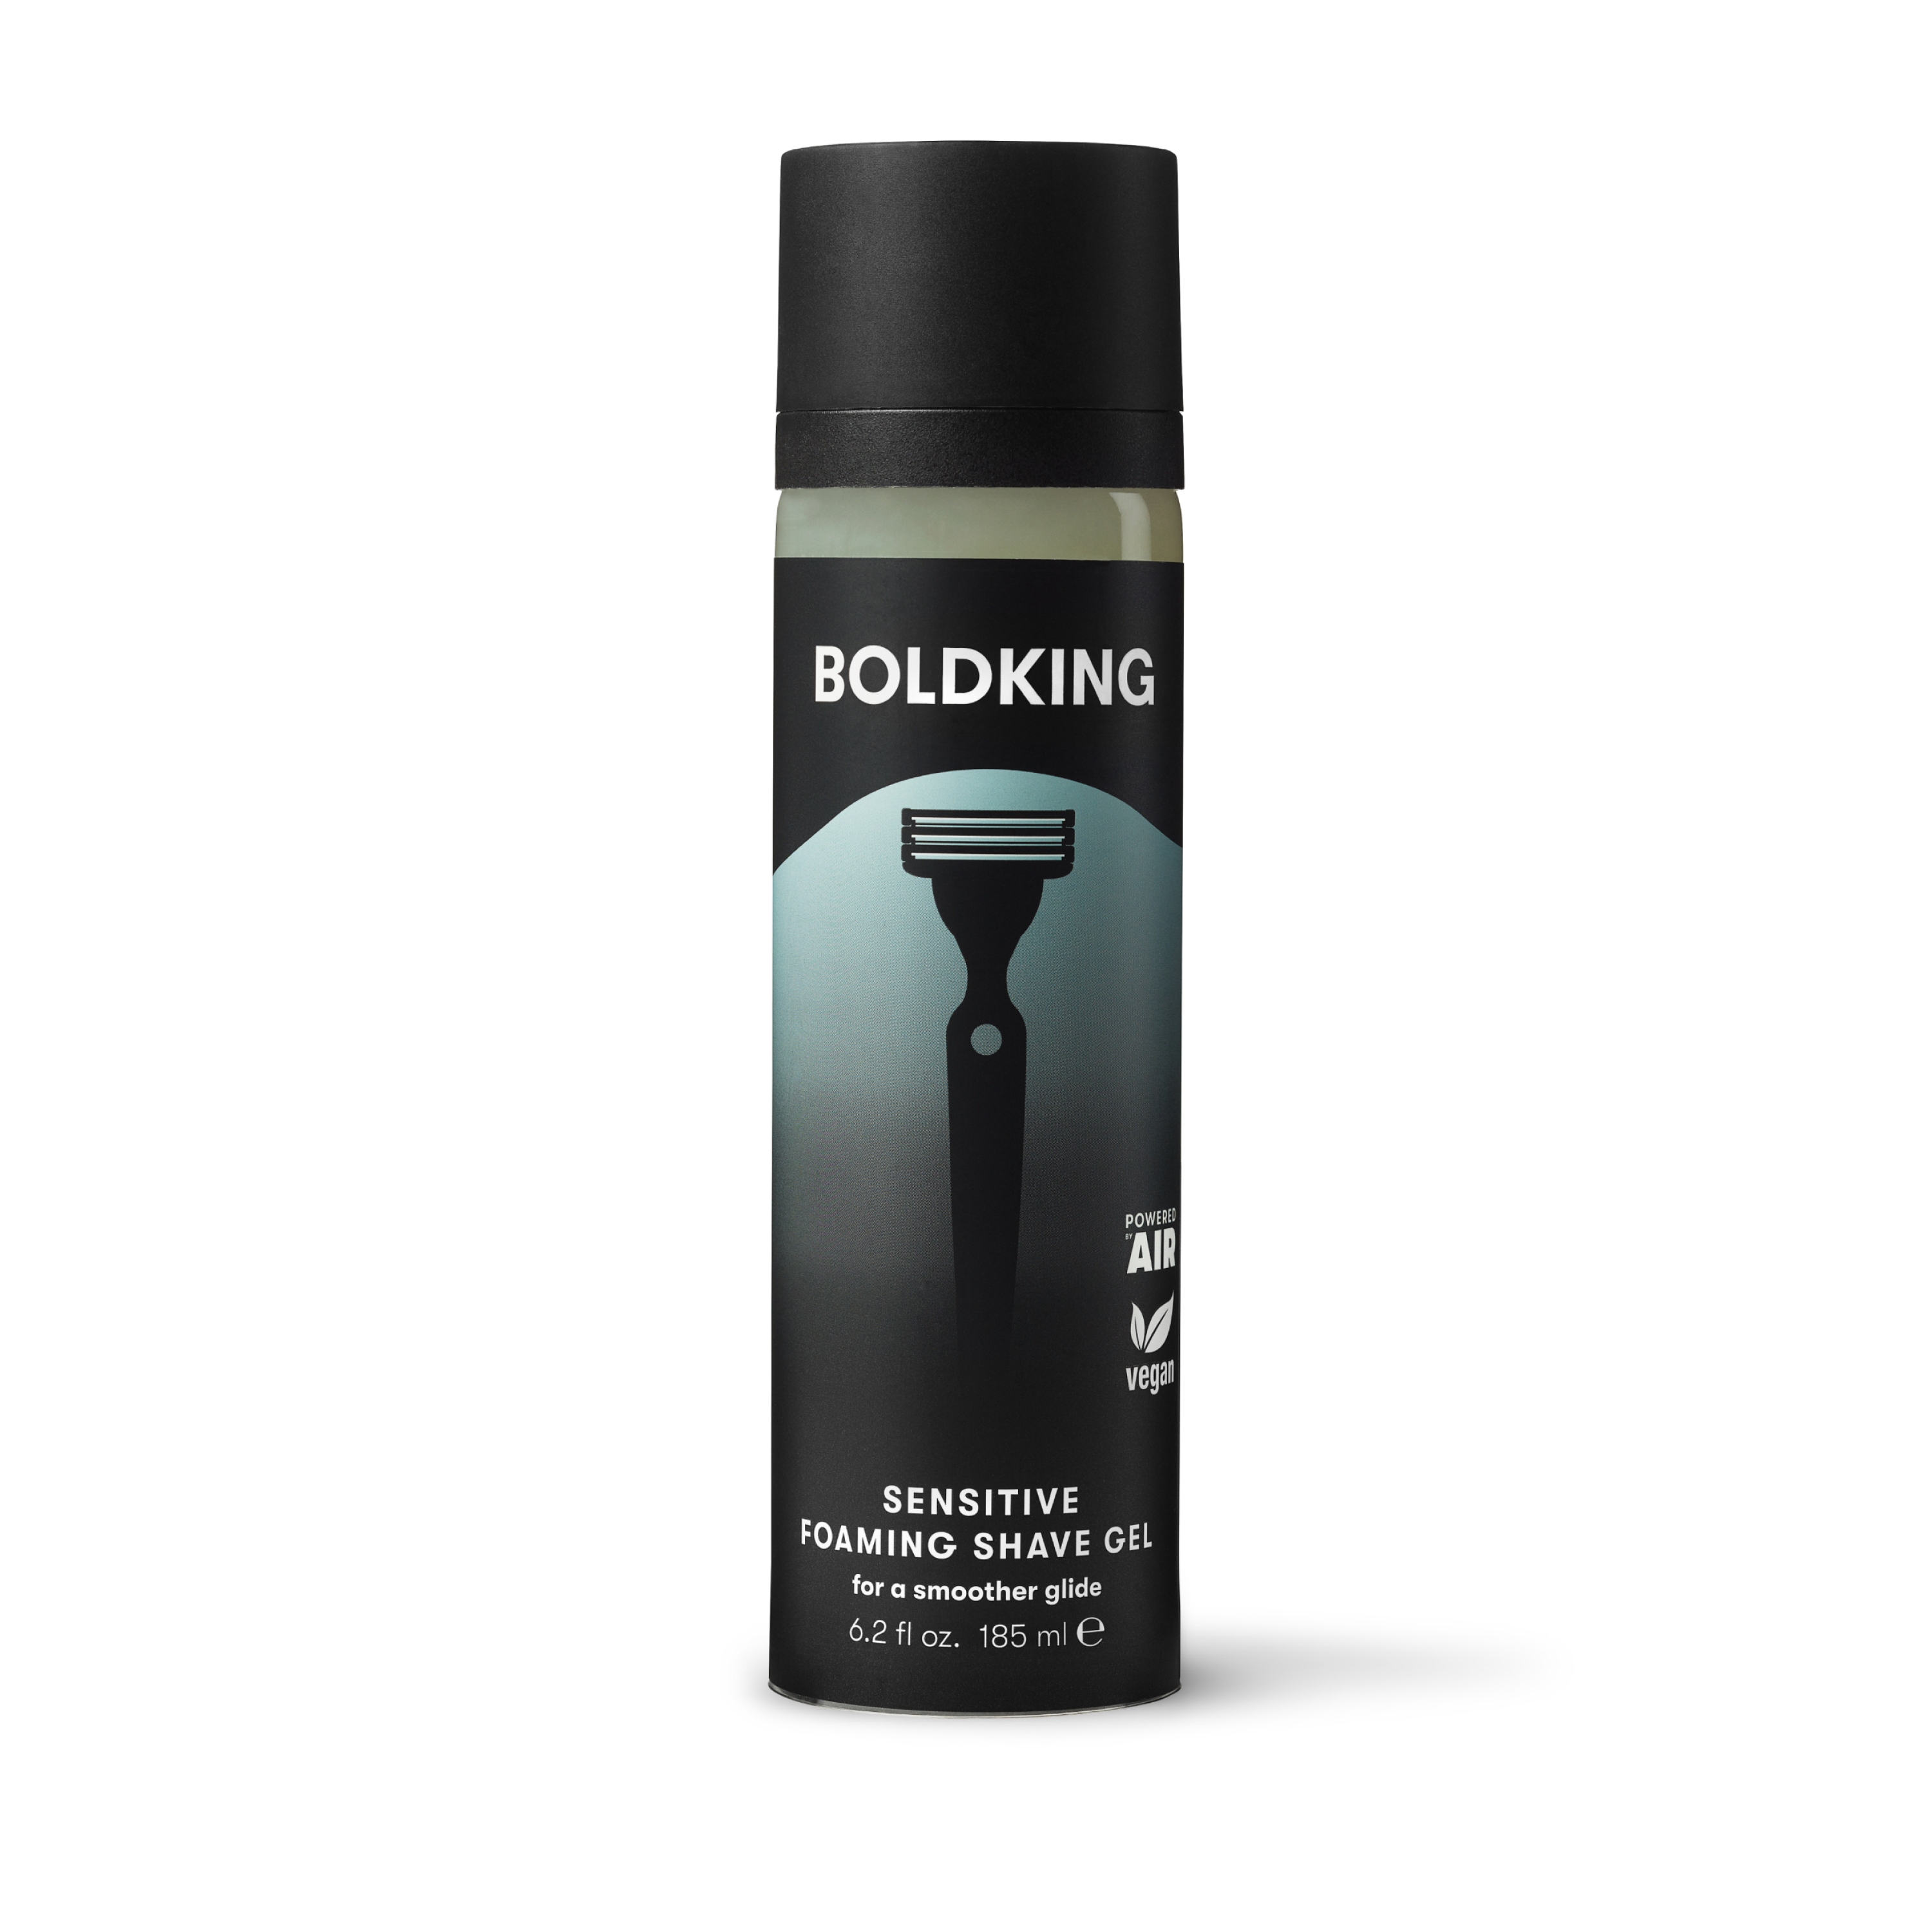 Boldking Foaming Shave Gel 185ml Sensitive